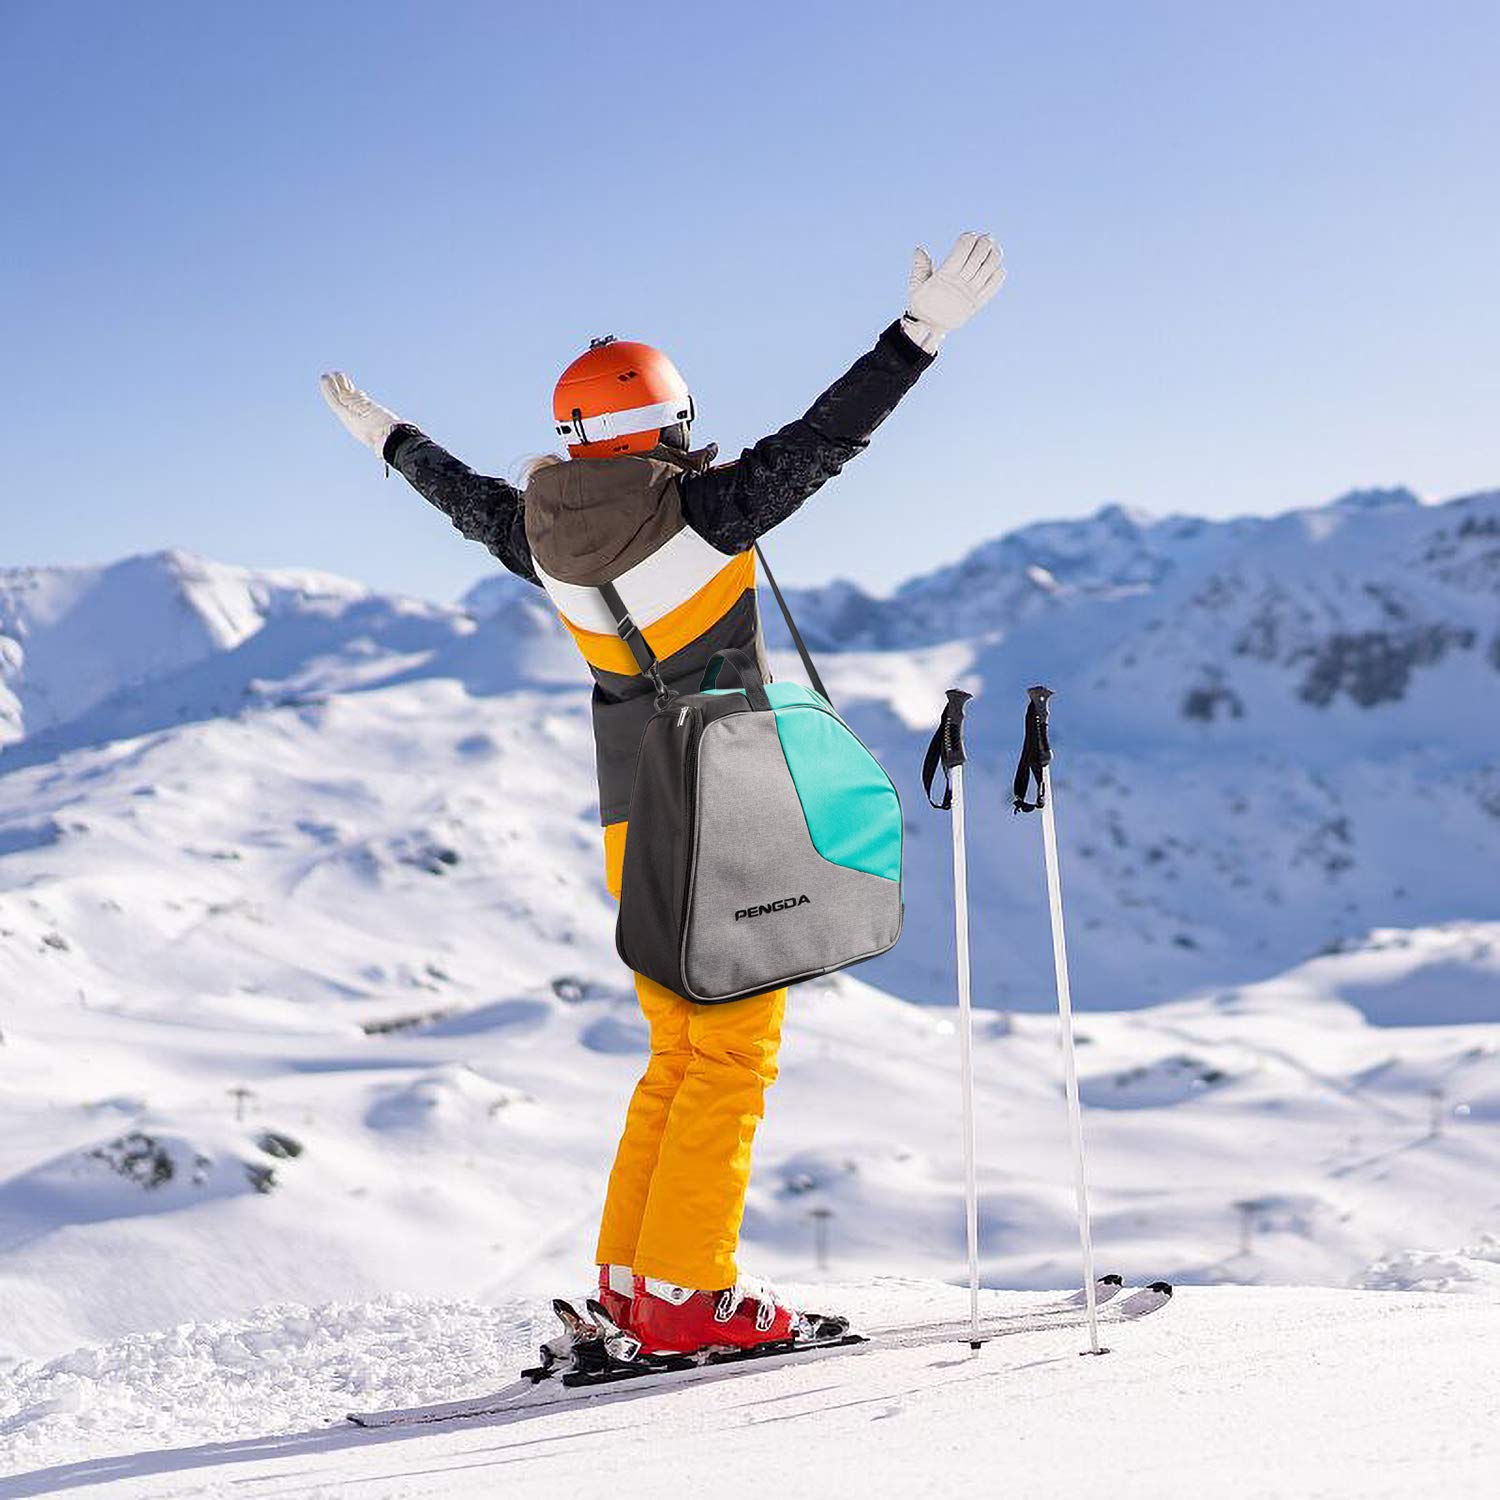 PENGDA Ski Boot Bag -Ski Boots Snowboard Boots Bag Waterproof Travel Boot Bag for Ski Helmets, Goggles, Gloves, Ski Apparel & Bo